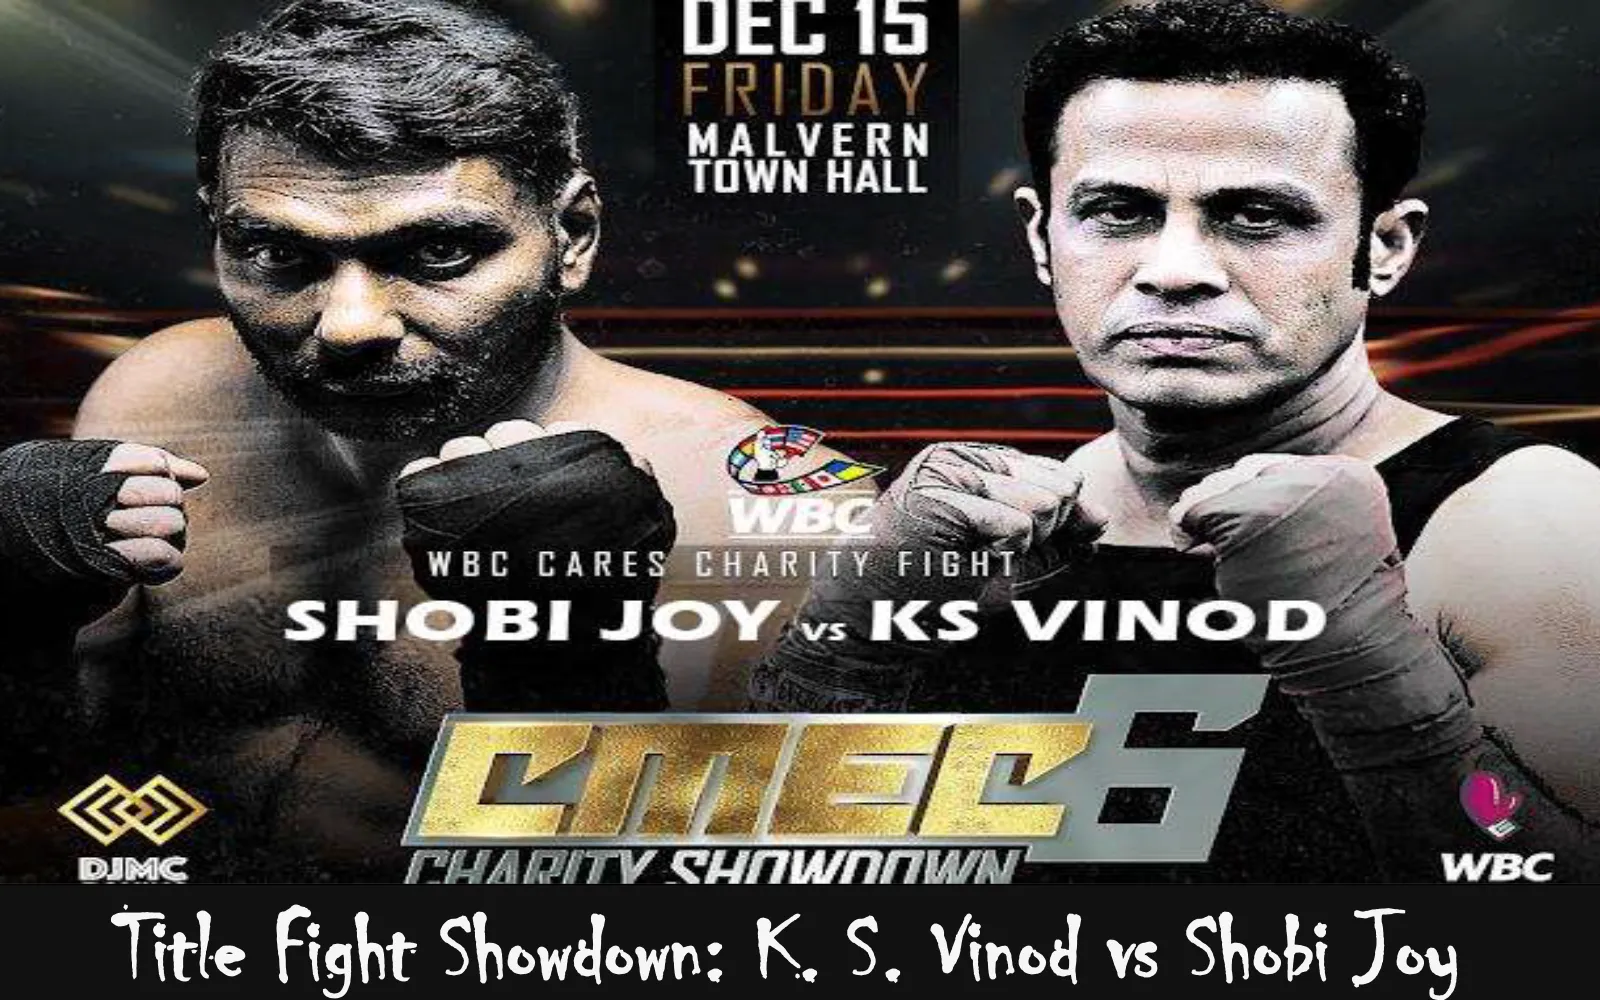 Shobi Joy vs KS Vinod Charity Showdown flyer